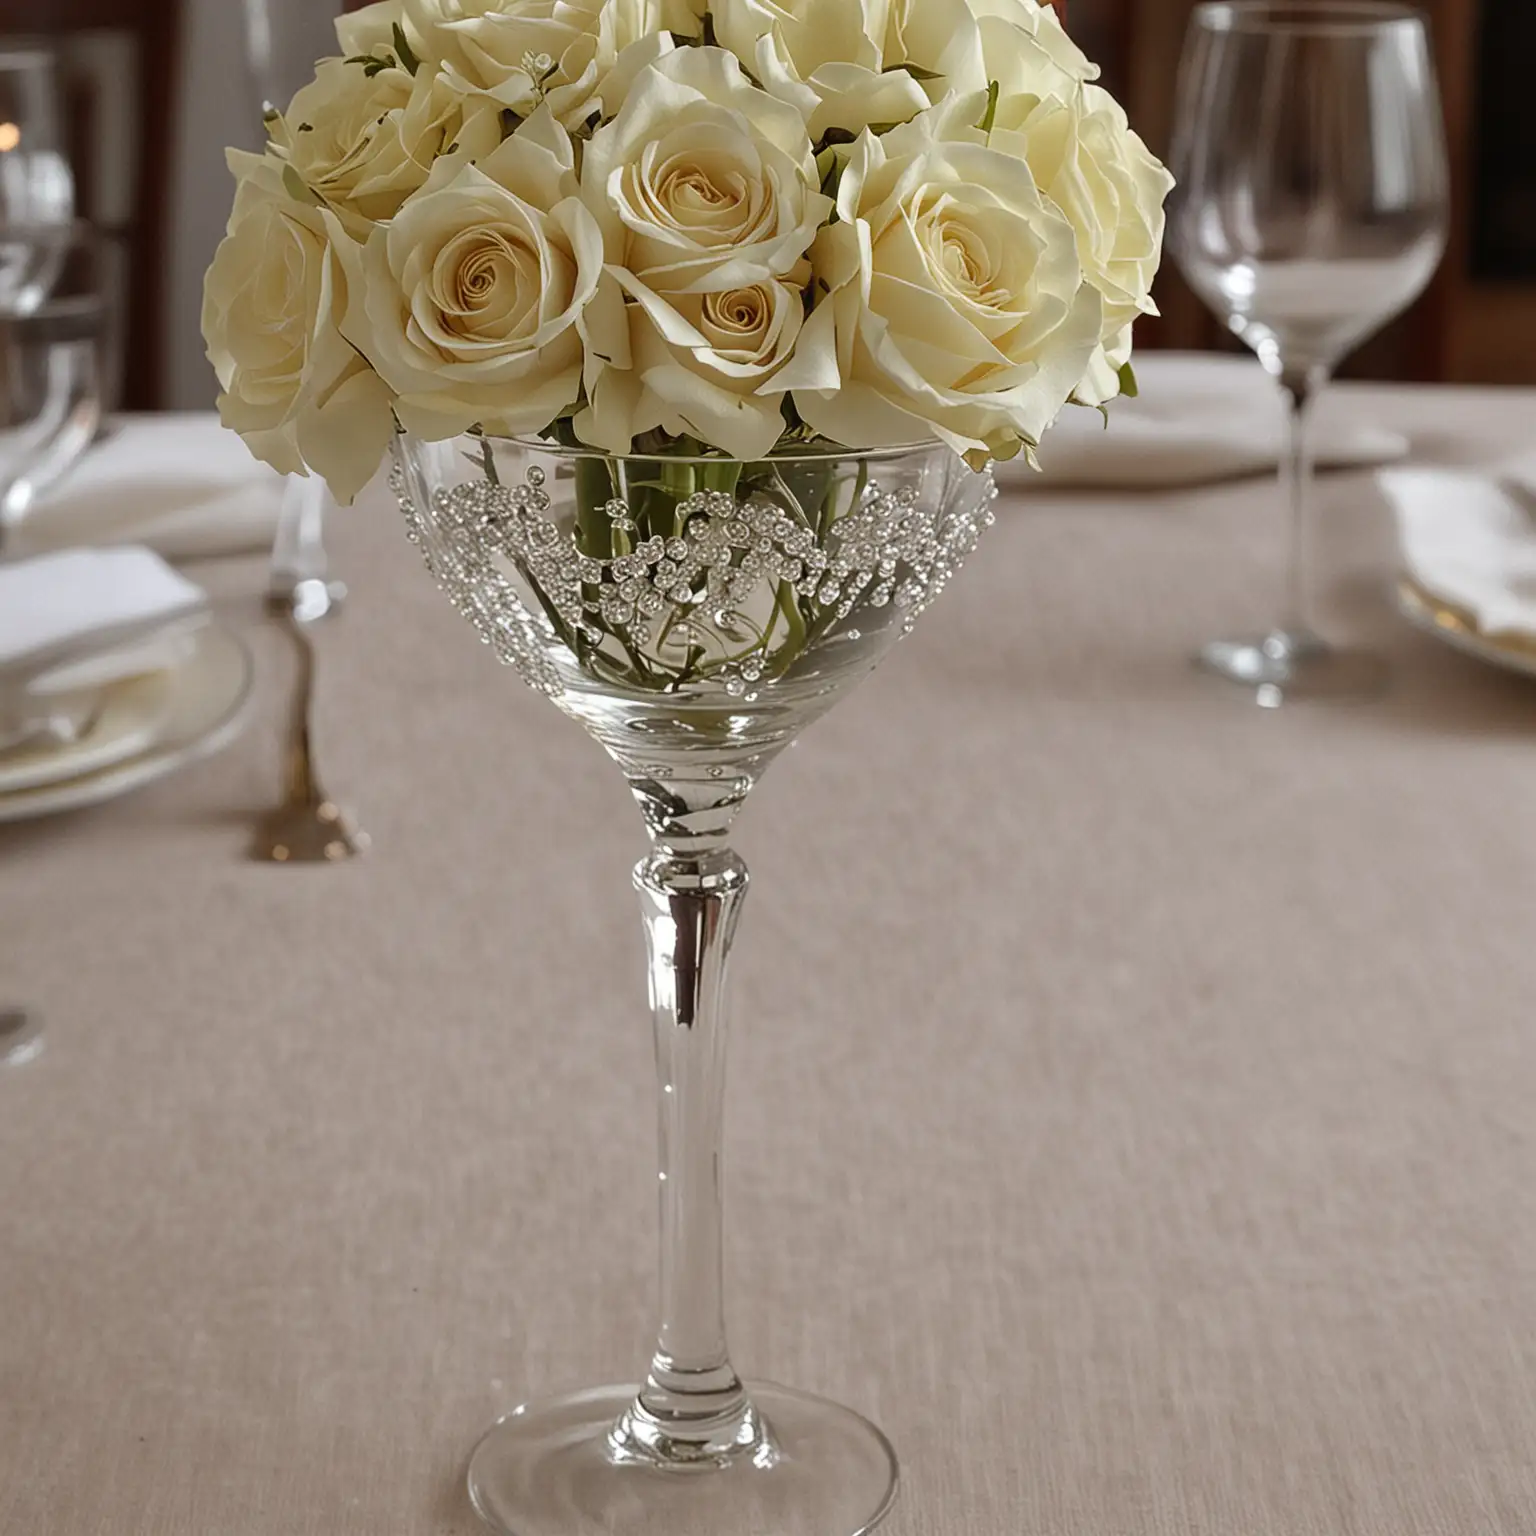 a small unique elegant wedding centerpiece using an elegant wine glass